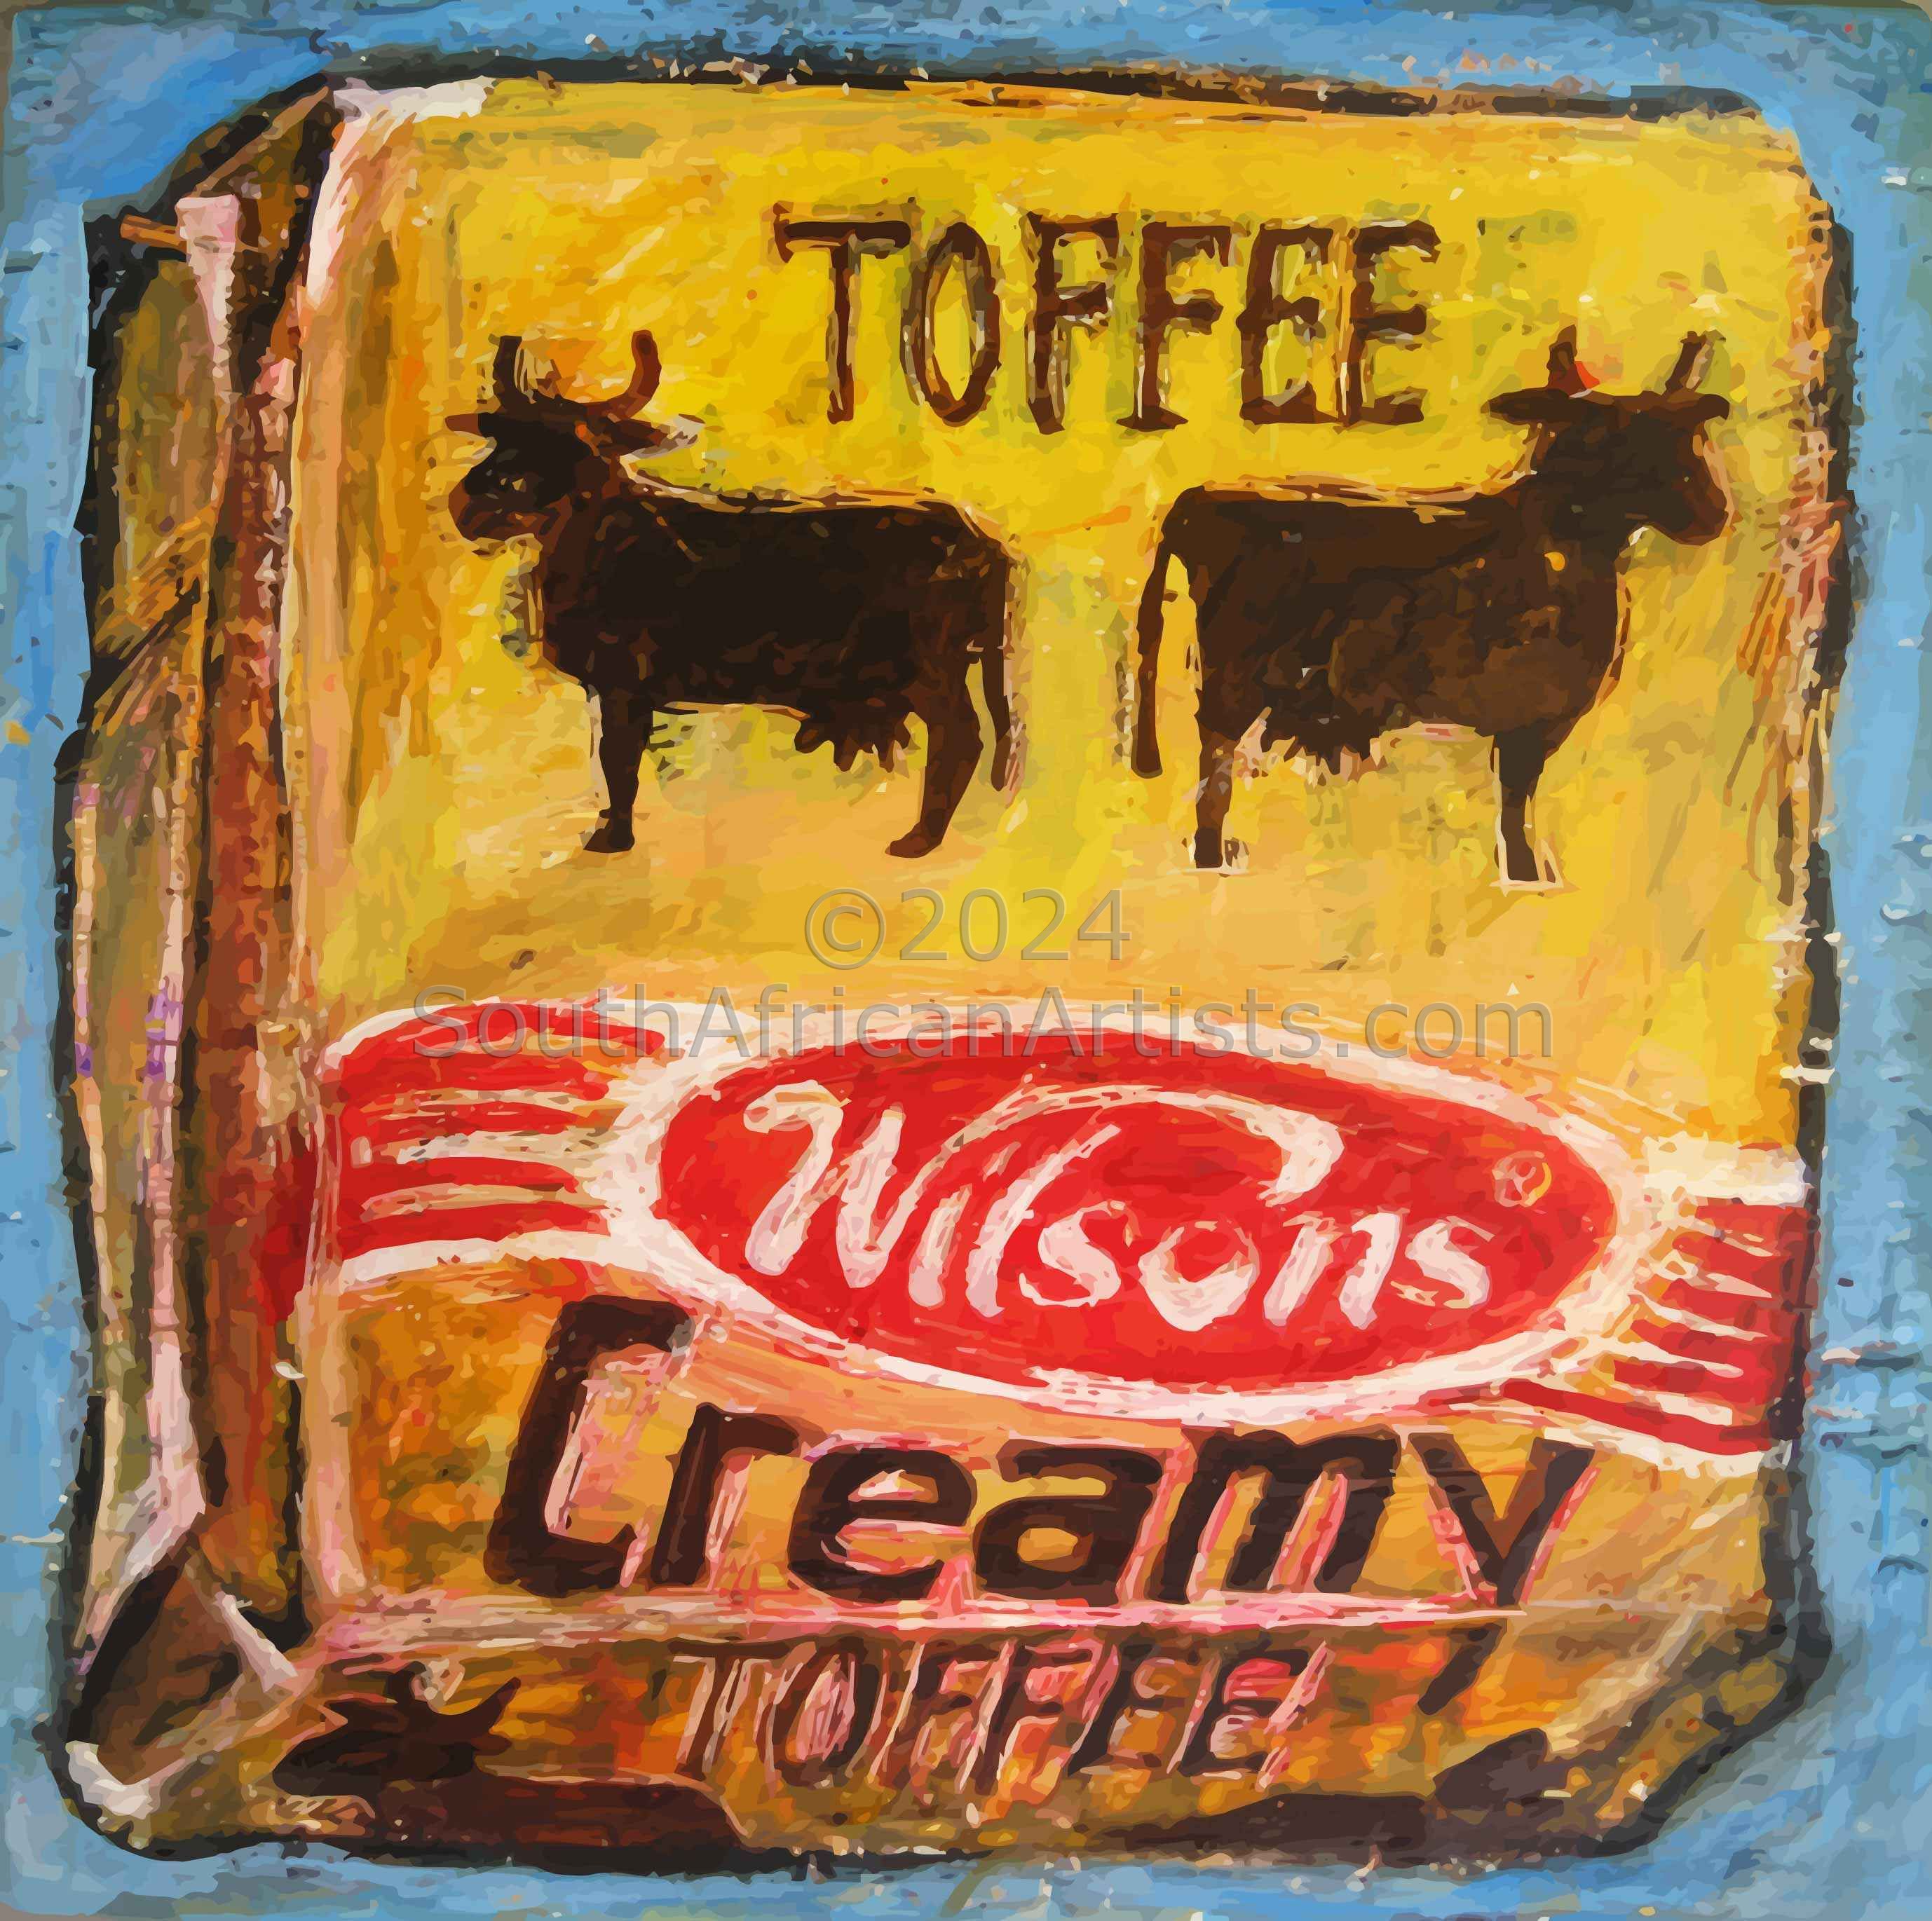 Wilsons creamy toffee